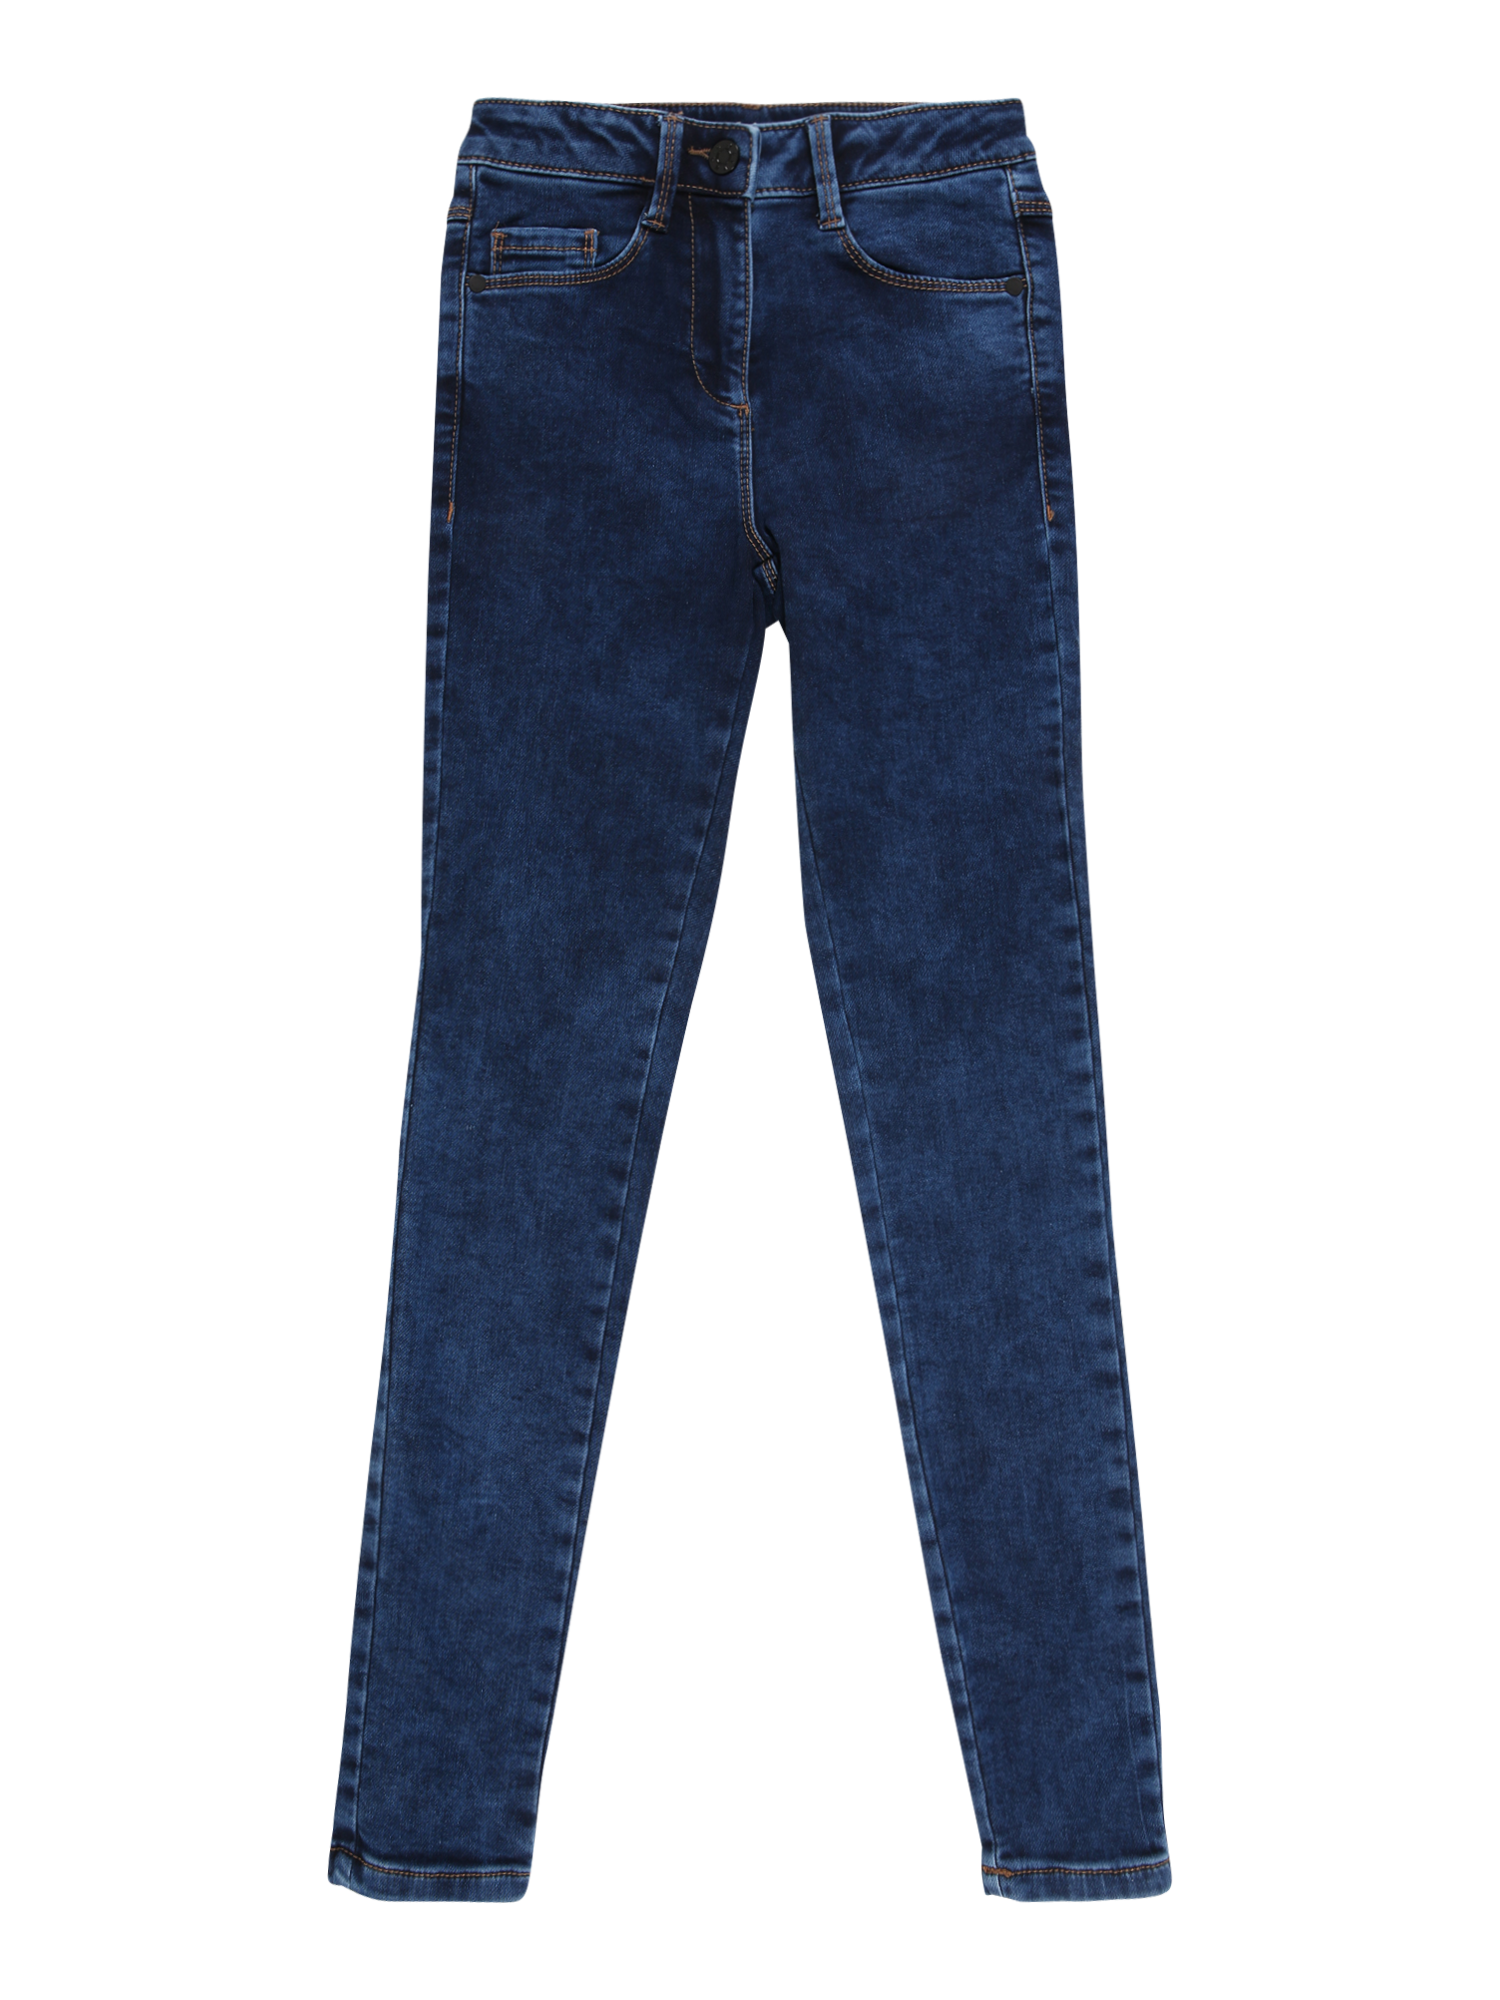 Bambina (taglie 92-140) IS5Tb s.Oliver Jeans SURI in Blu 